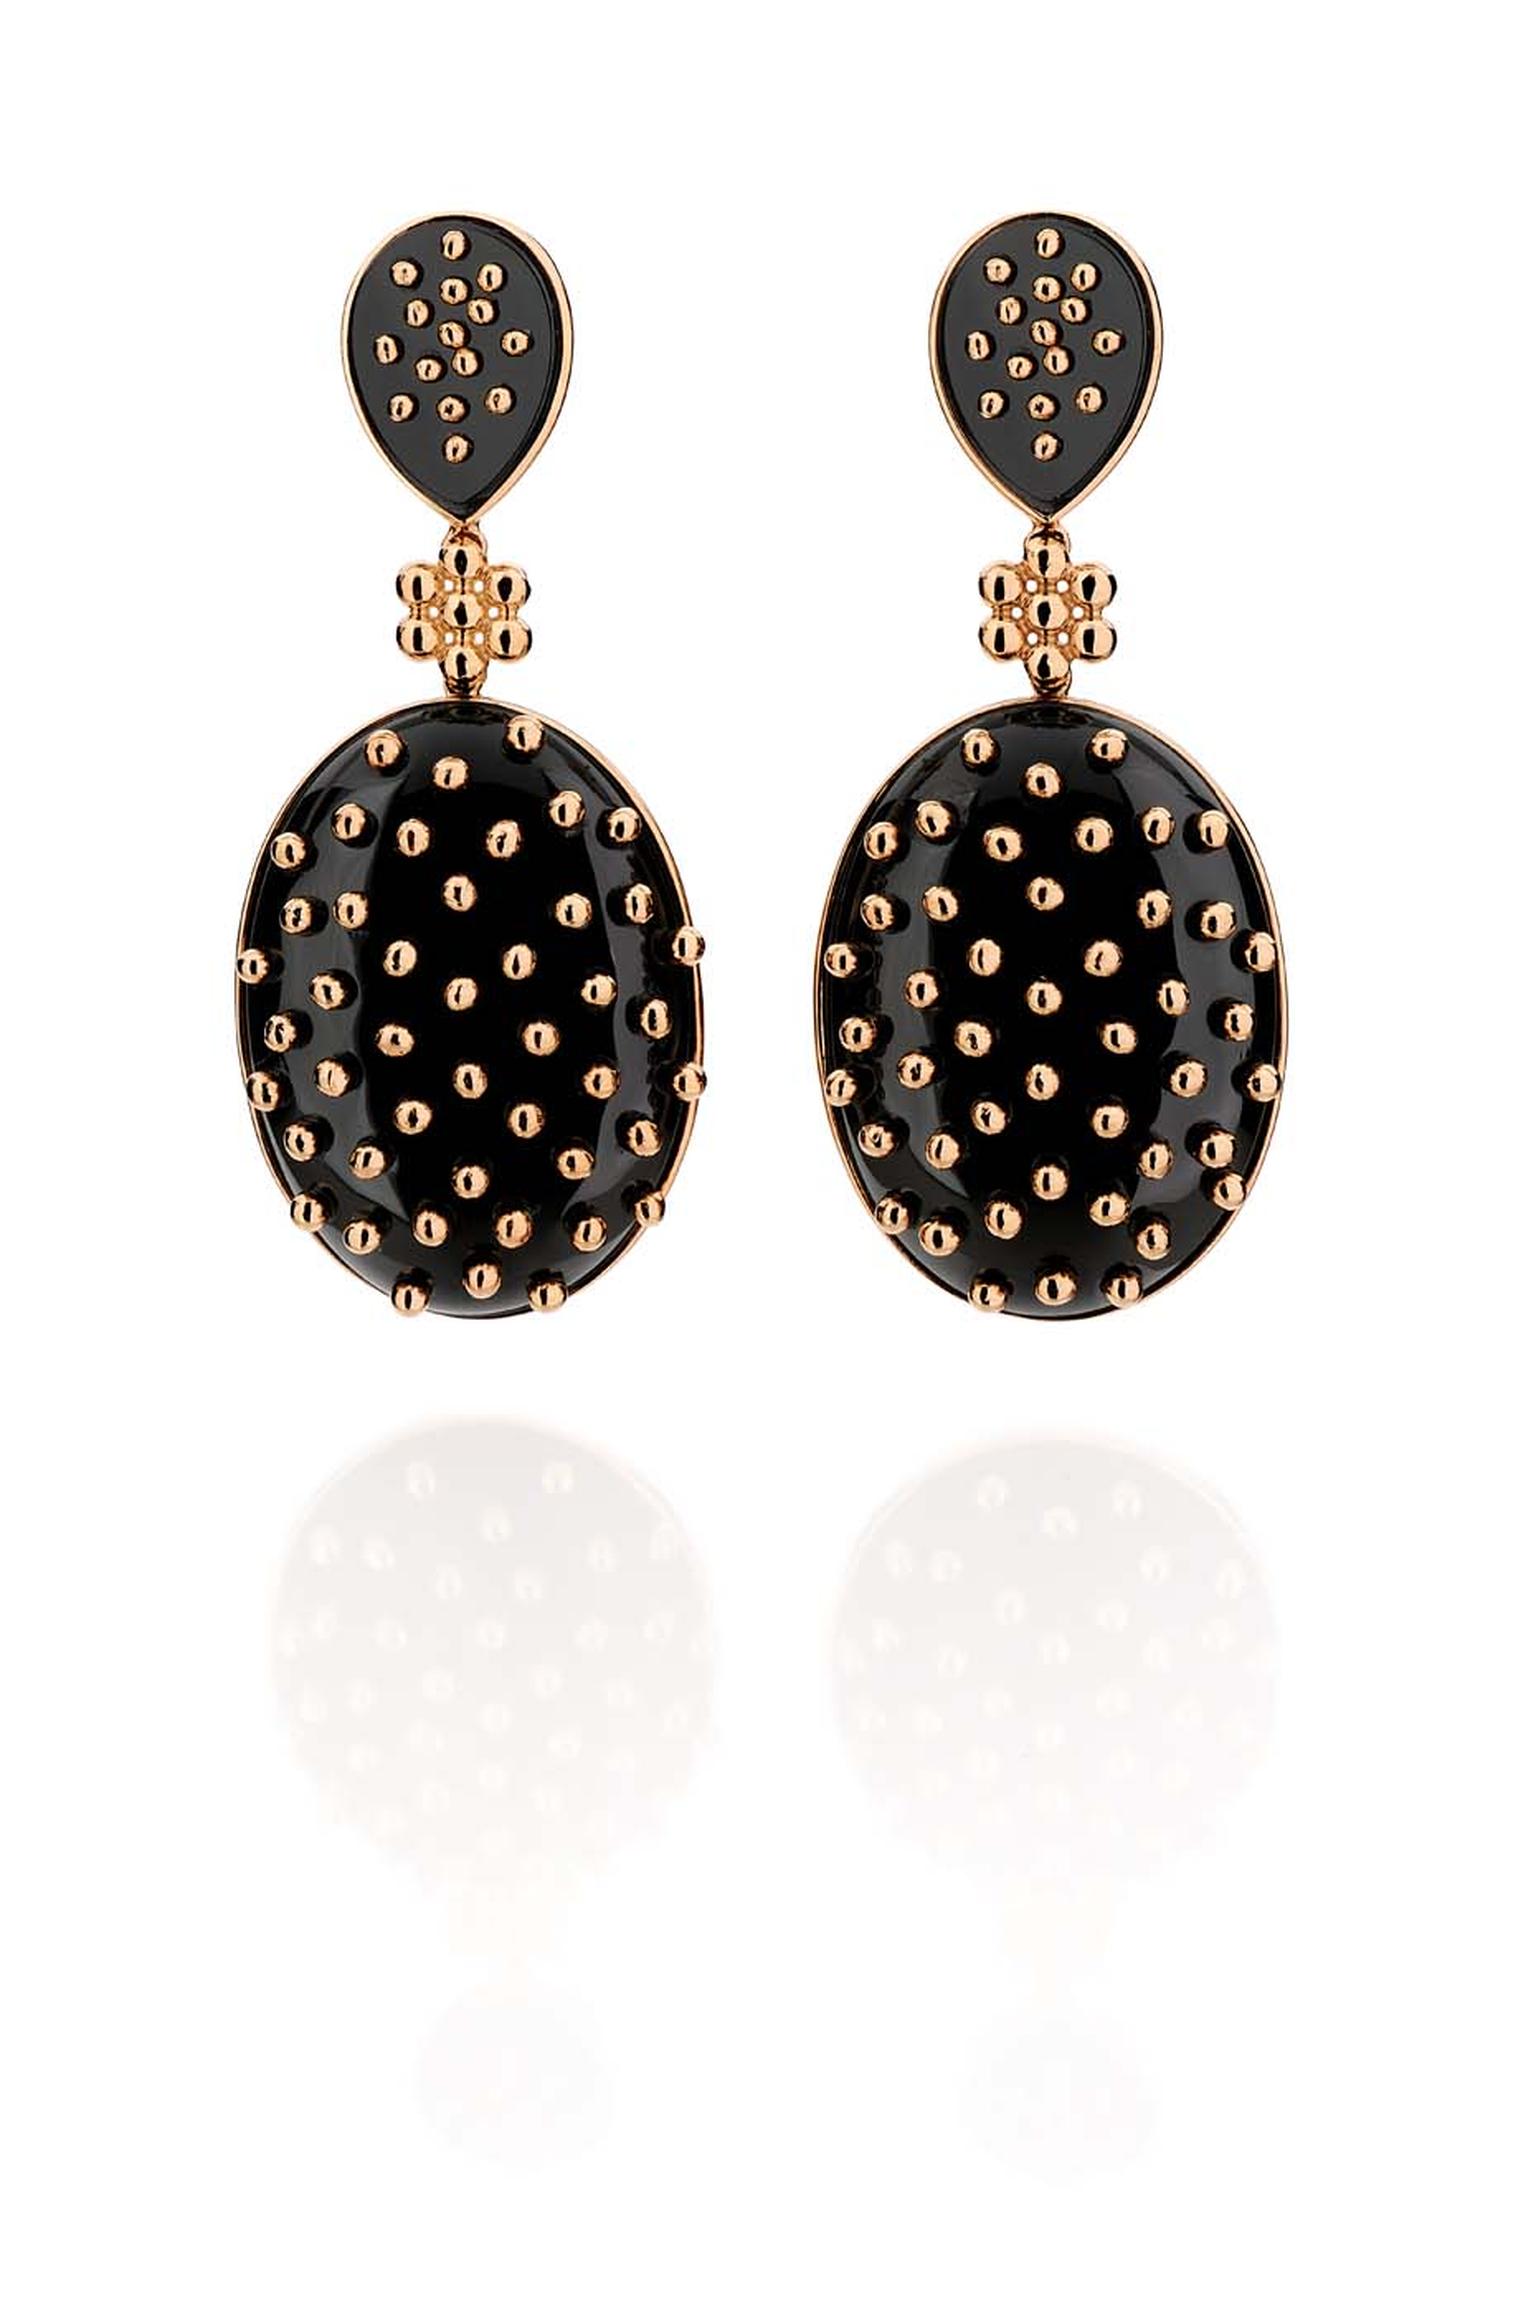 Carla Amorim rose gold Noite Paulistana earrings with onyx.